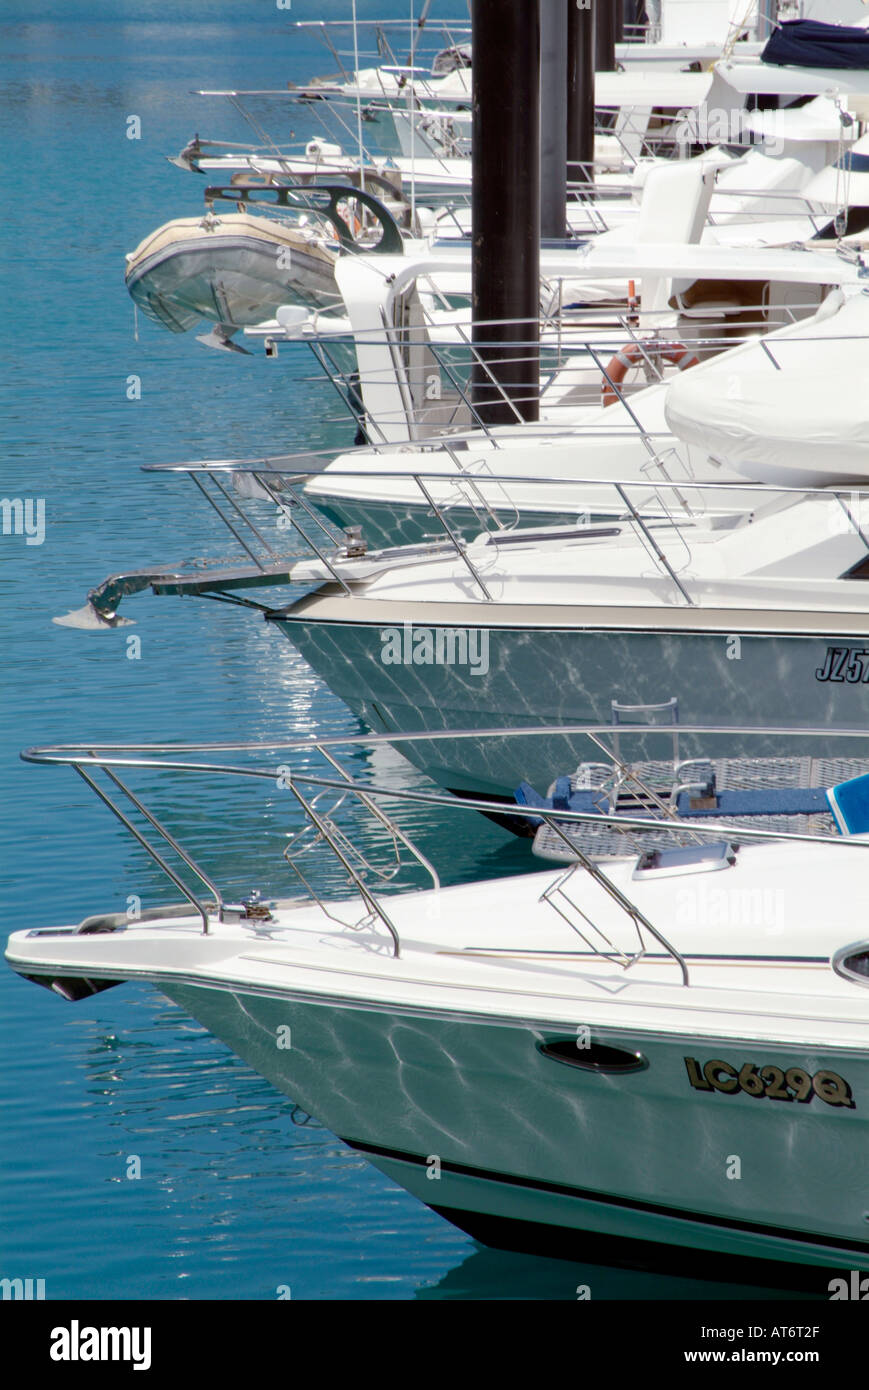 Marina-Boot-Yacht-Meer-Wasser-Playboy entspannen Airlee Beach Queensland Proserpina Airlee Strand Boot Schiff Marina Yacht Himmelblau tropic Stockfoto